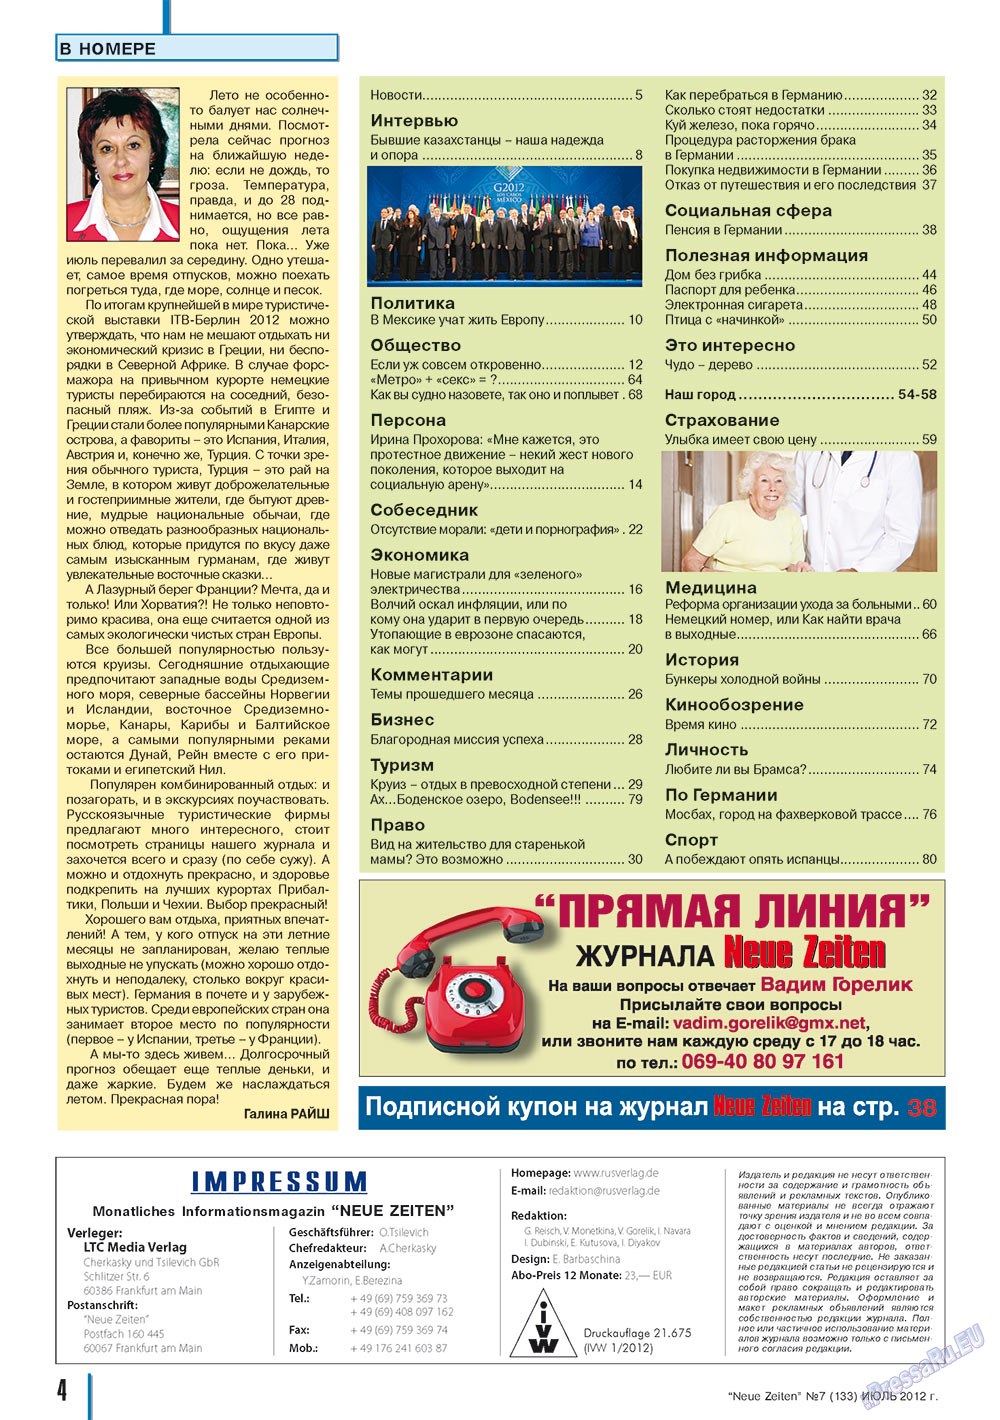 Neue Zeiten (журнал). 2012 год, номер 7, стр. 4